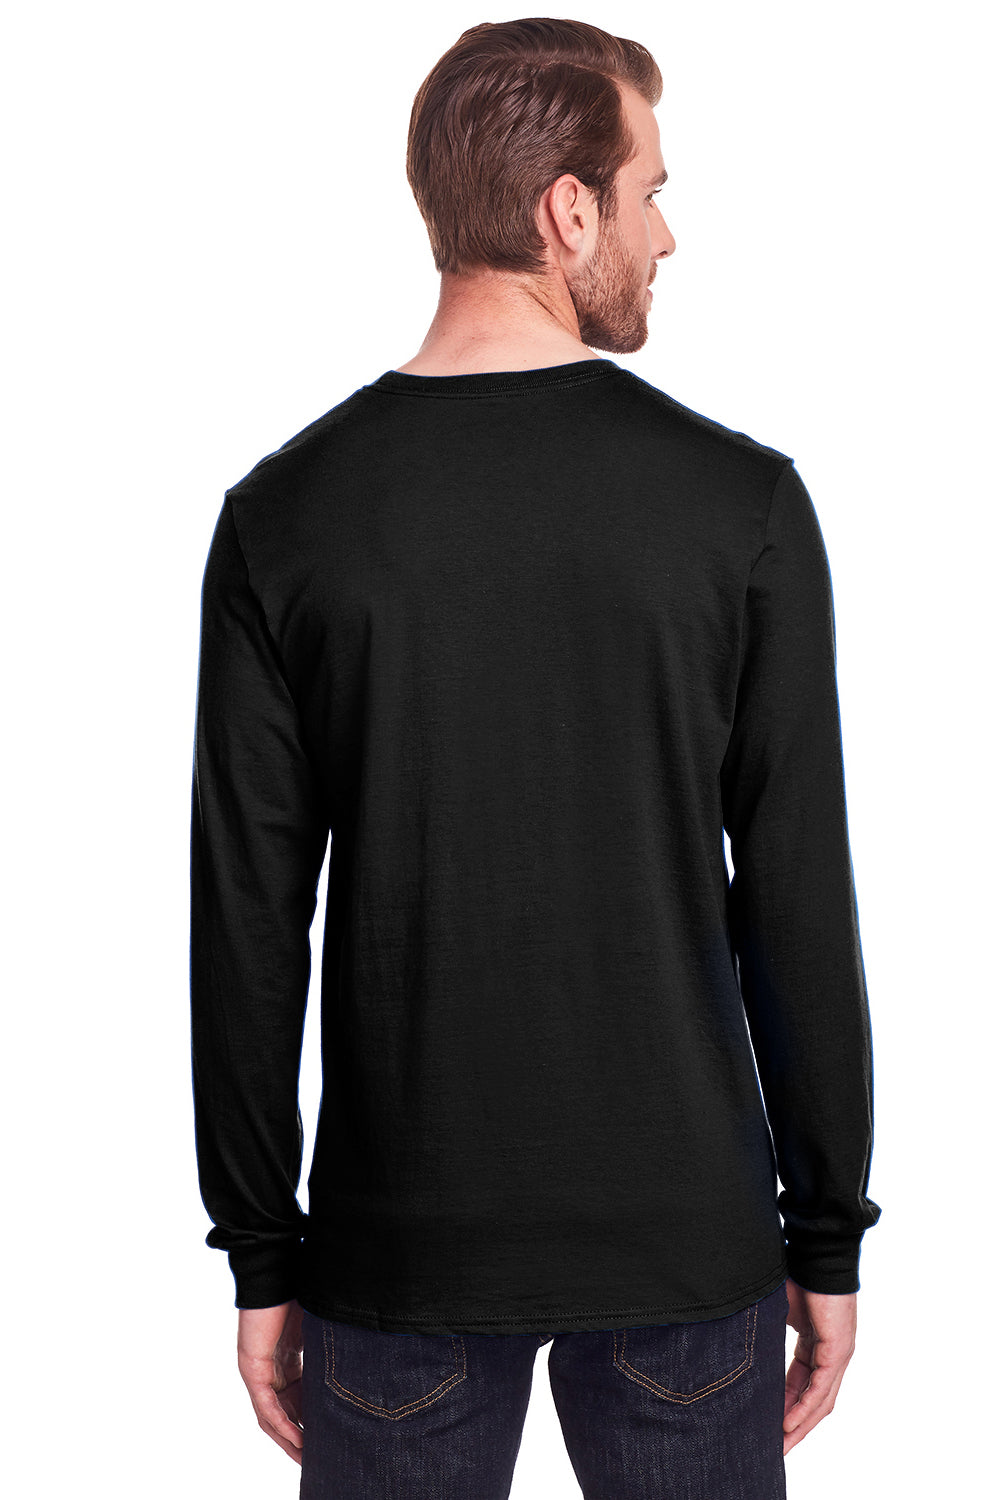 Fruit Of The Loom IC47LSR Mens Iconic Long Sleeve Crewneck T-Shirt Black Back